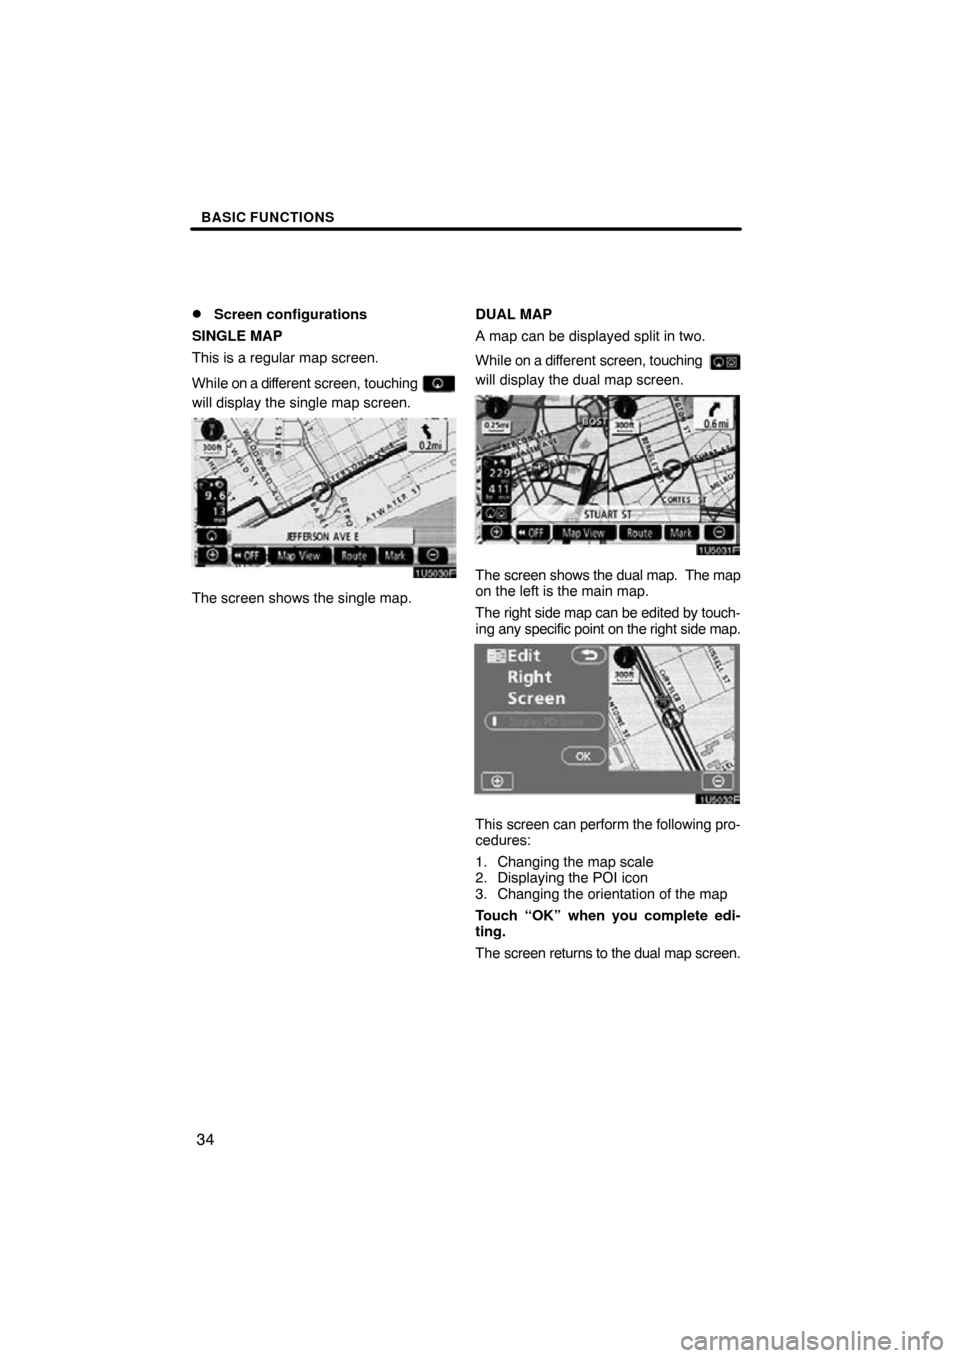 TOYOTA HIGHLANDER 2009 XU40 / 2.G Navigation Manual BASIC FUNCTIONS
34

Screen configurations
SINGLE MAP
This is a regular map screen.
While on a dif ferent screen, touching 
will display the single map screen.
The screen shows the single map. DUAL MA